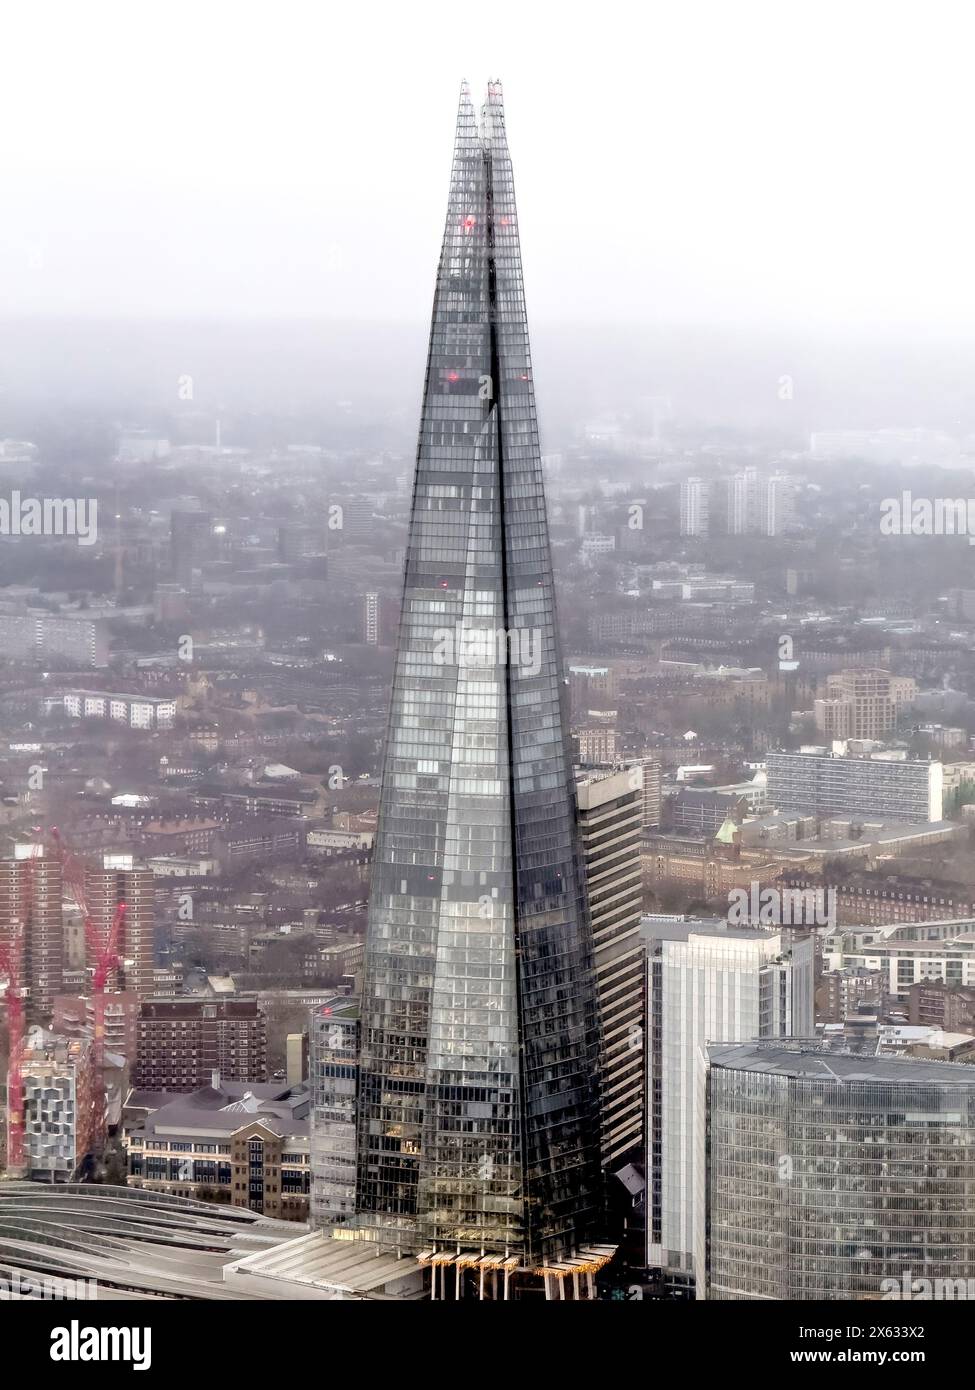 Erhöhter Blick vom Horizon 22 Building of the Shard an einem nebeligen Tag. London Stockfoto